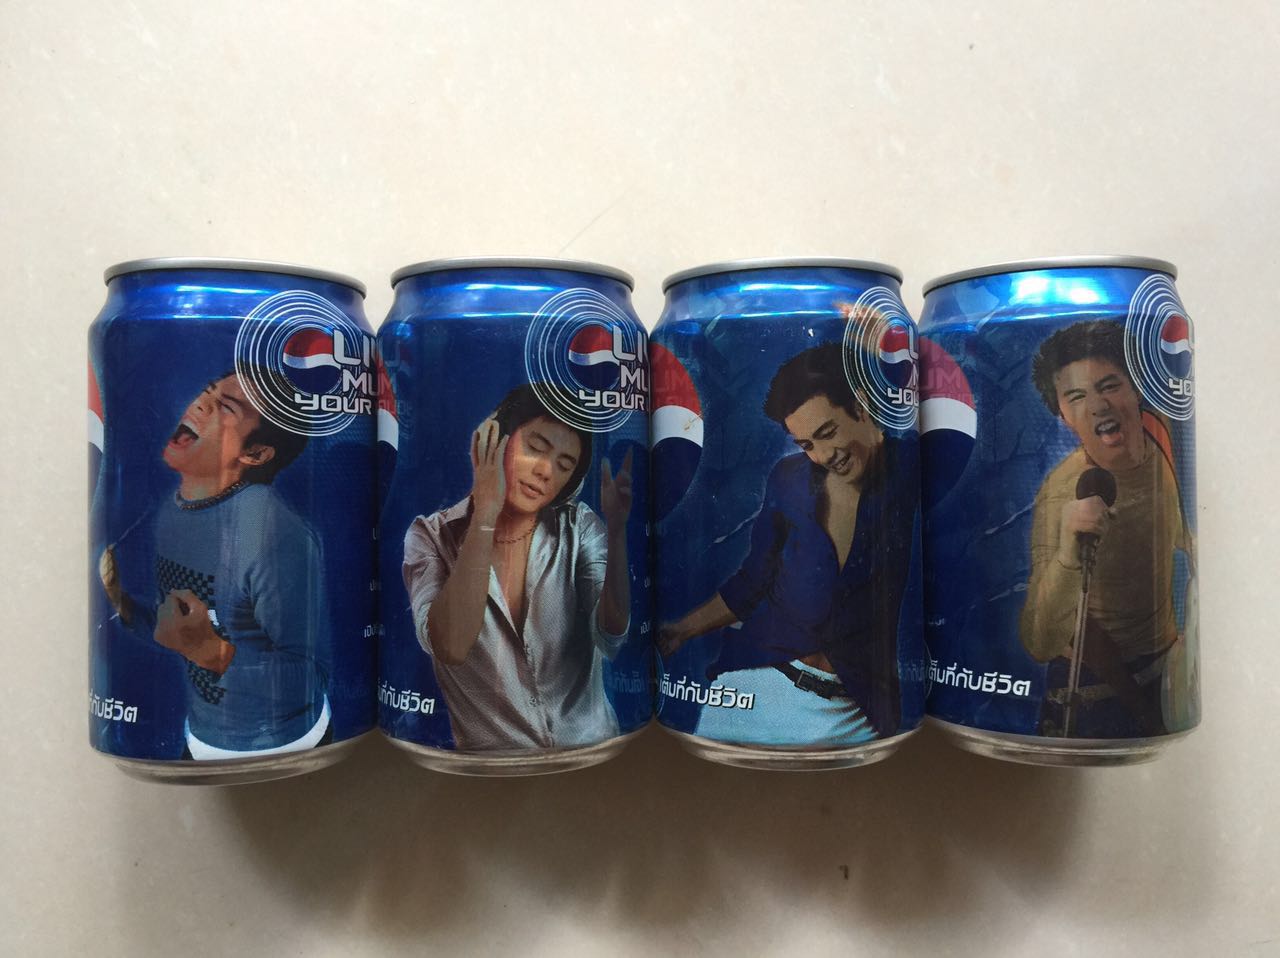 Pepsi Thai Star set of cans